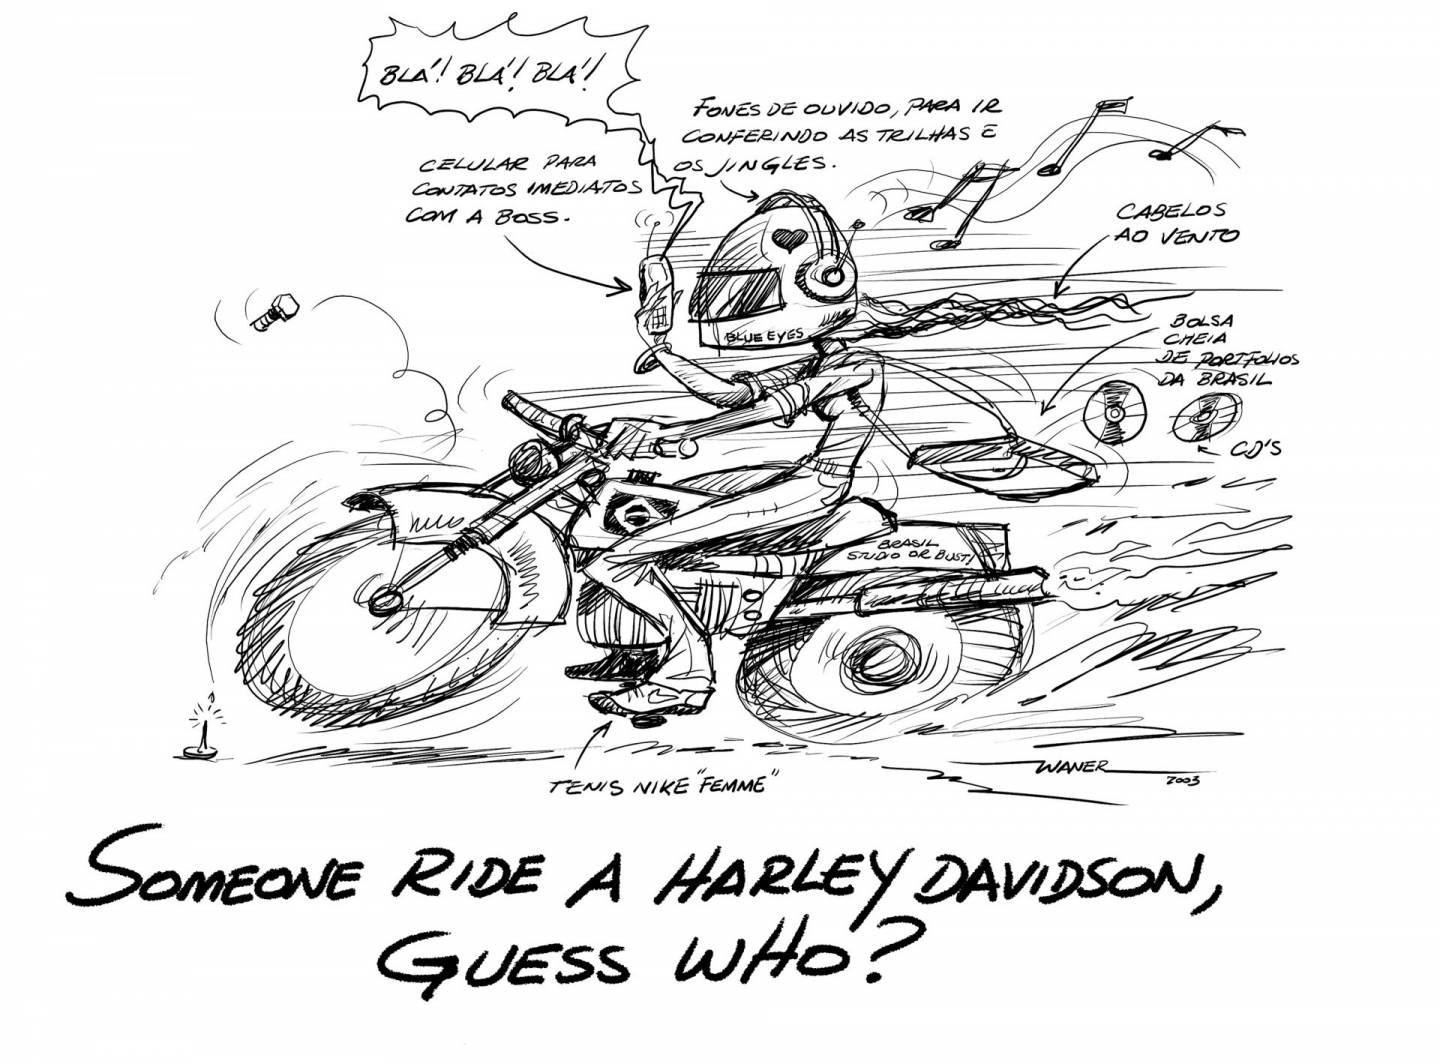 "Harley Davidson"